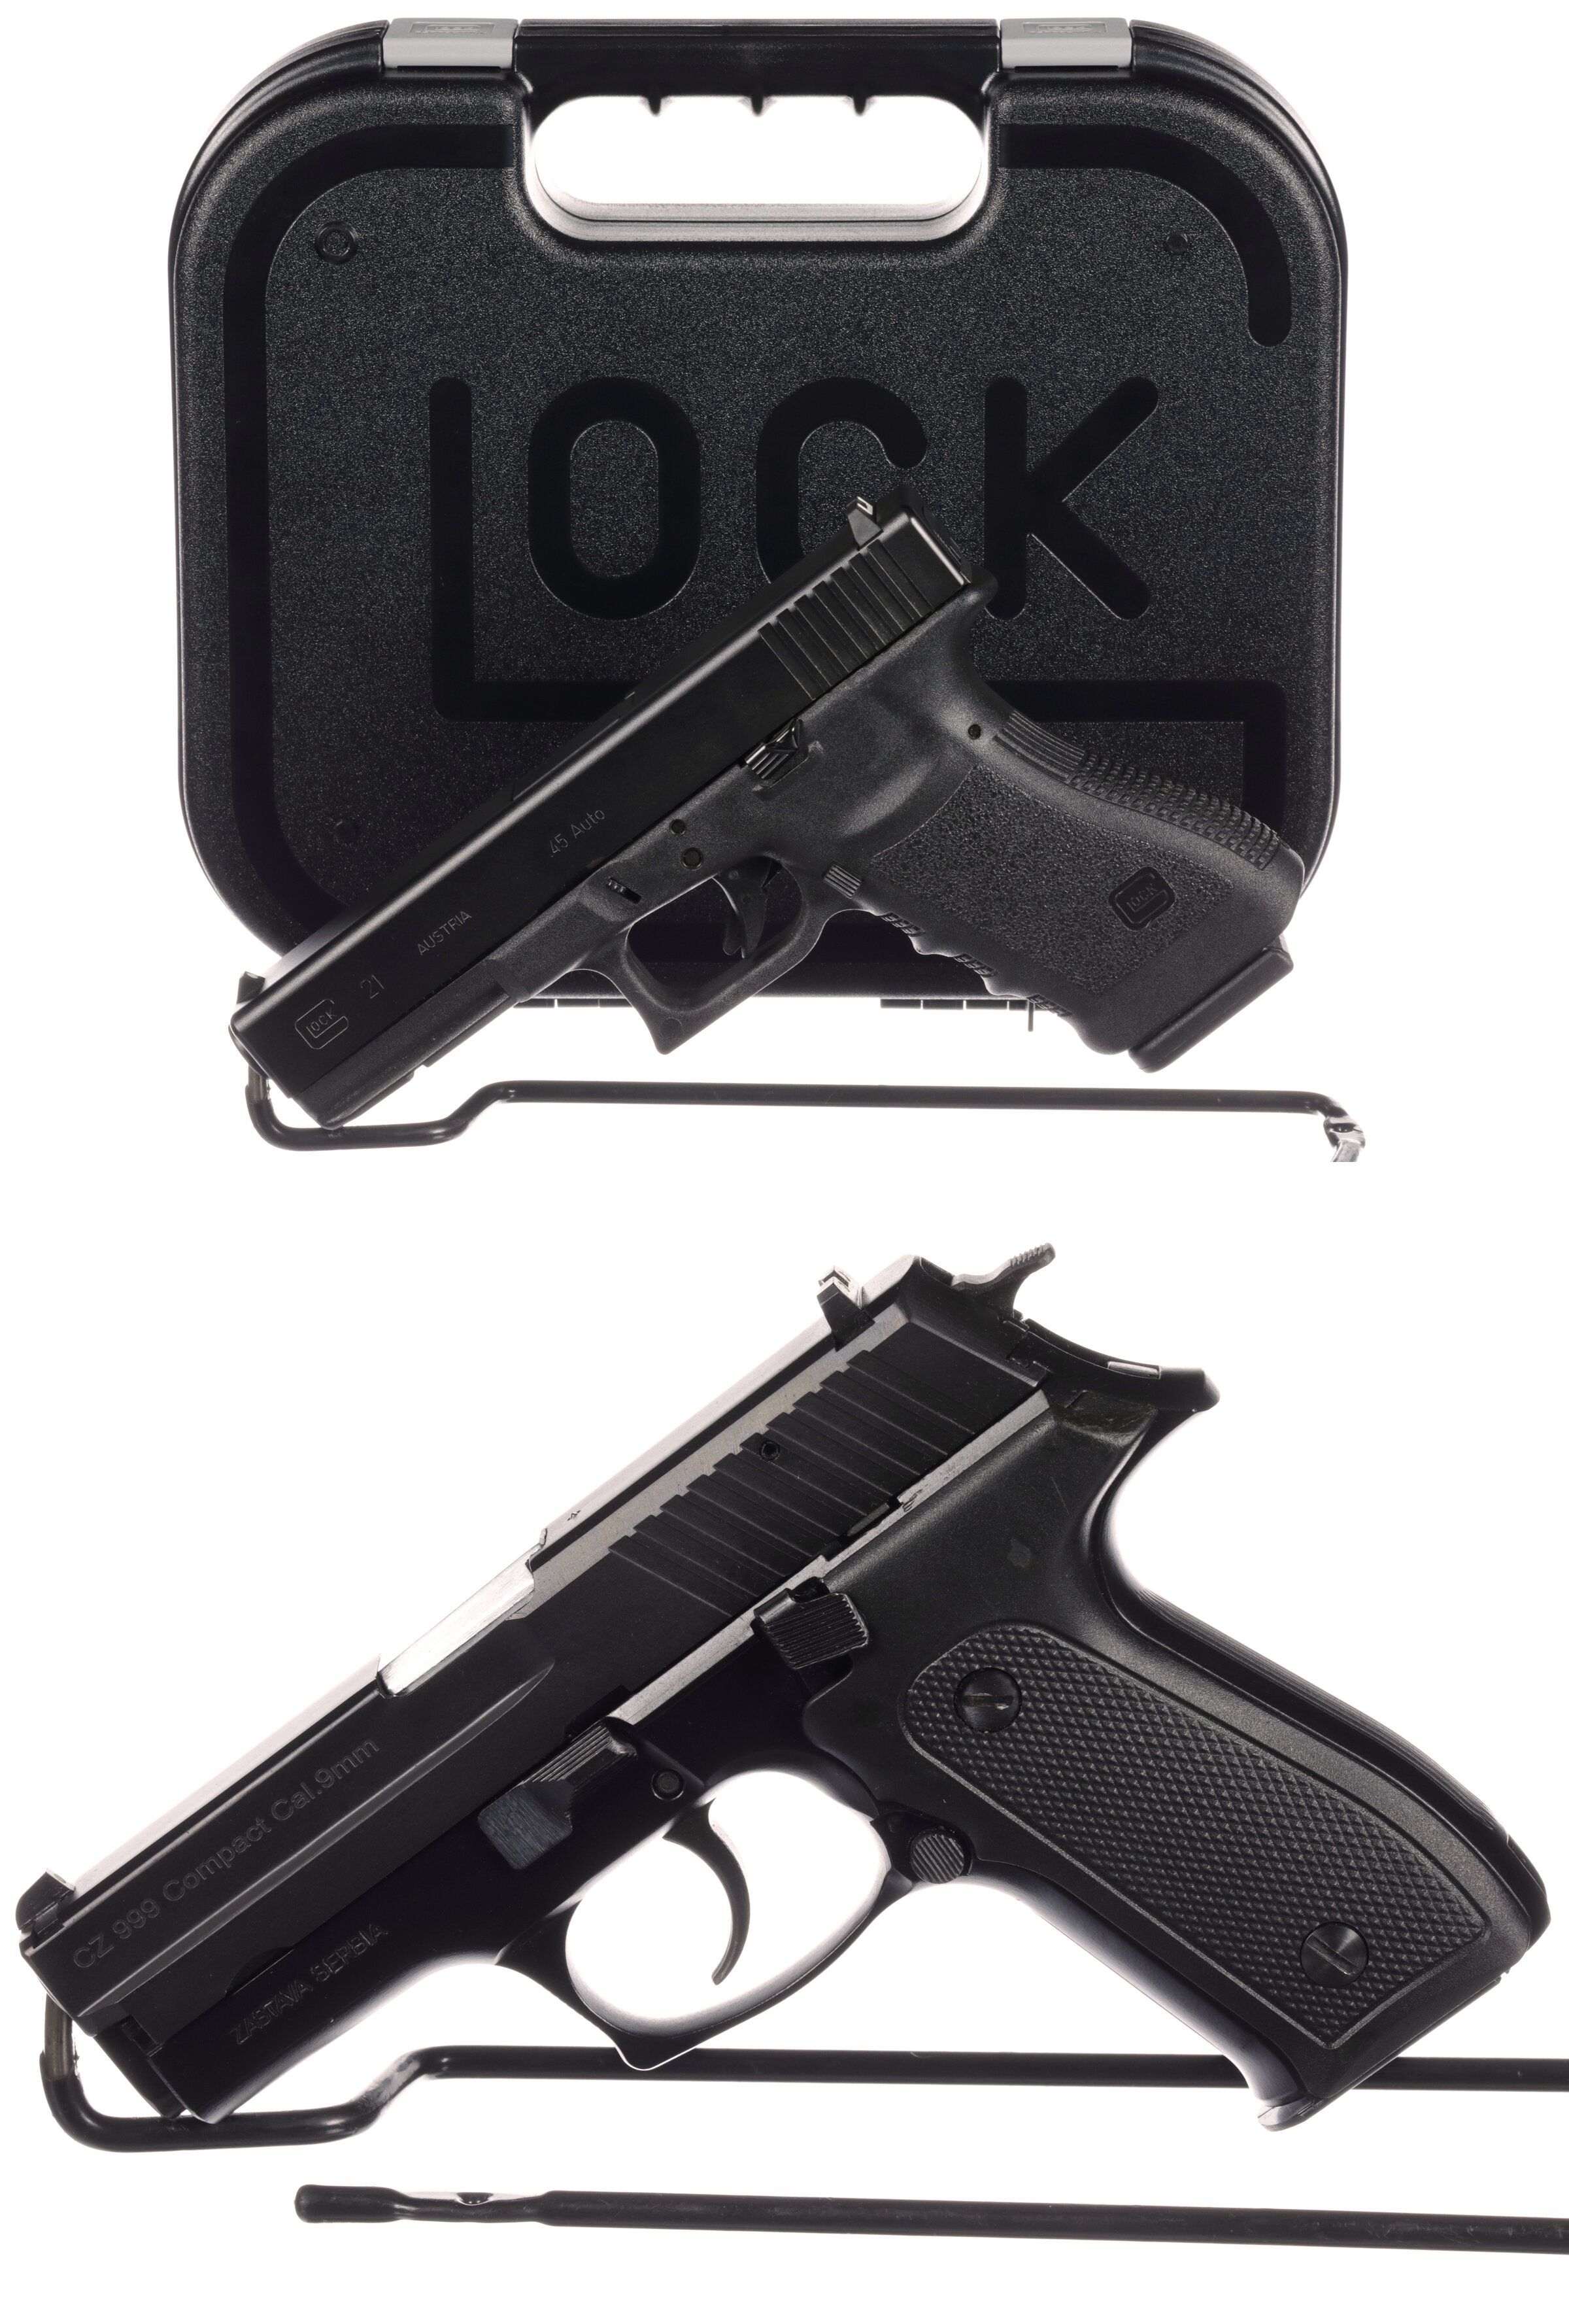 cz999 compact 40 cal pistol